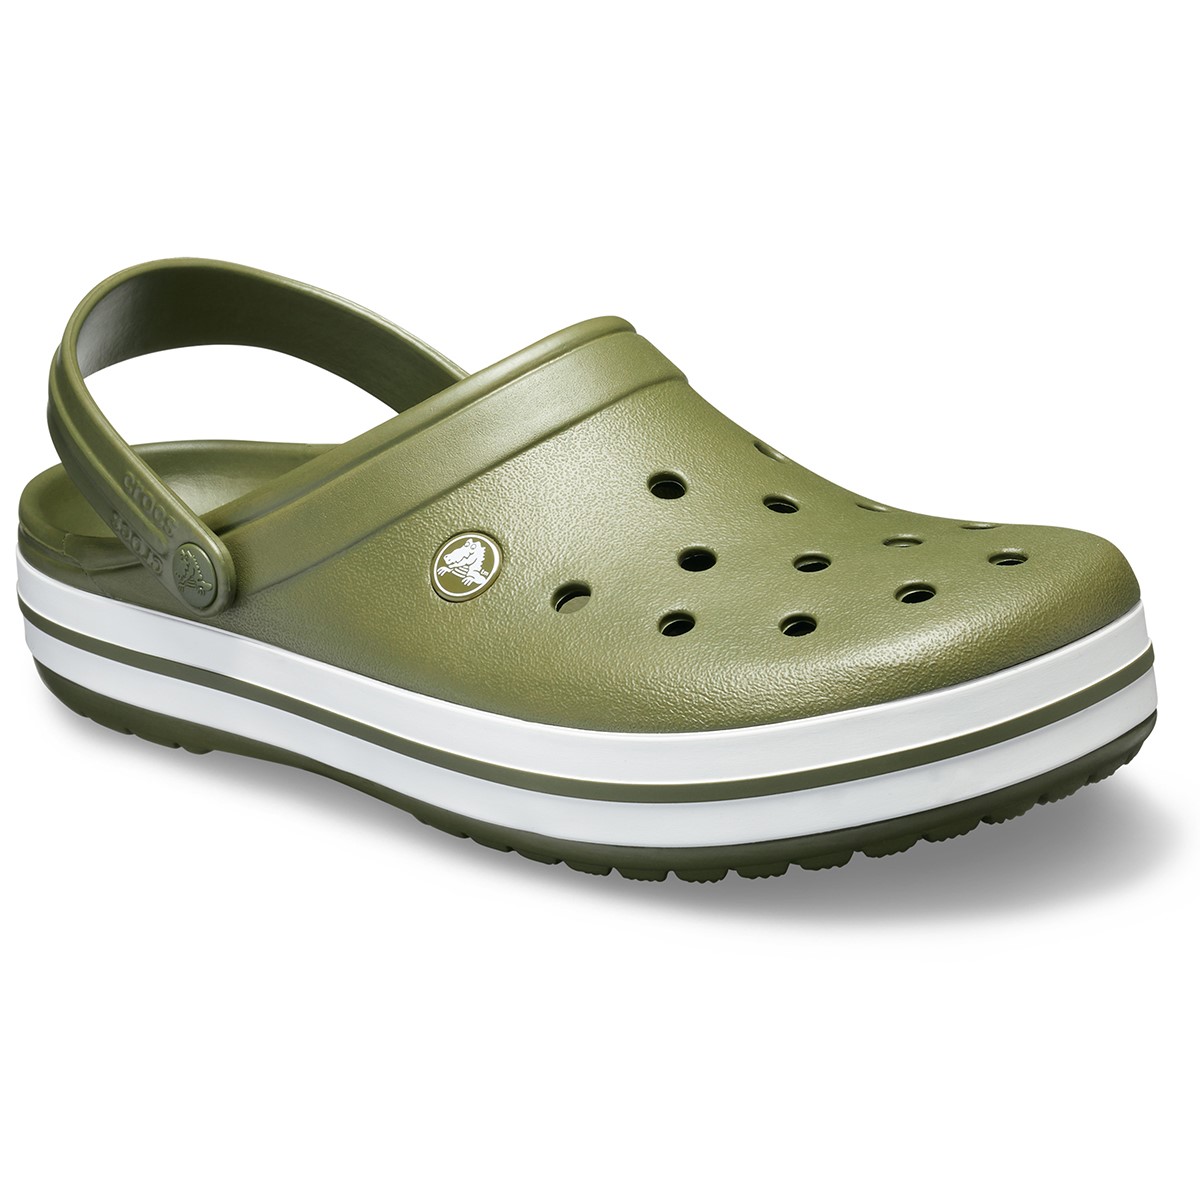 Crocs Unisex Sandalet 11016 Army Green/White